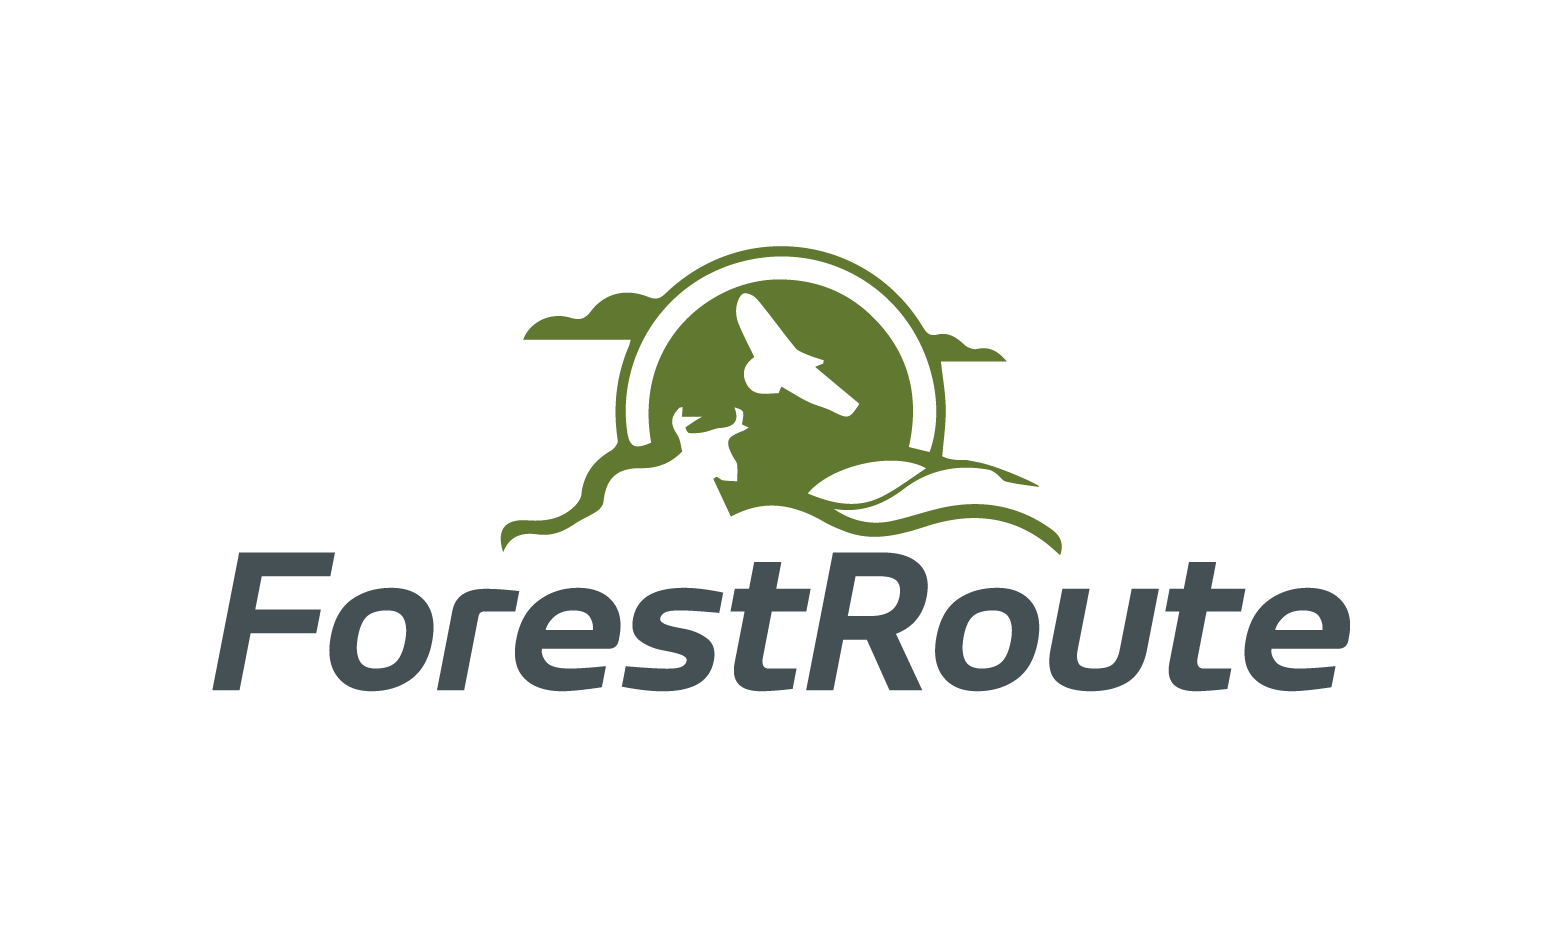 ForestRoute.com - Creative brandable domain for sale